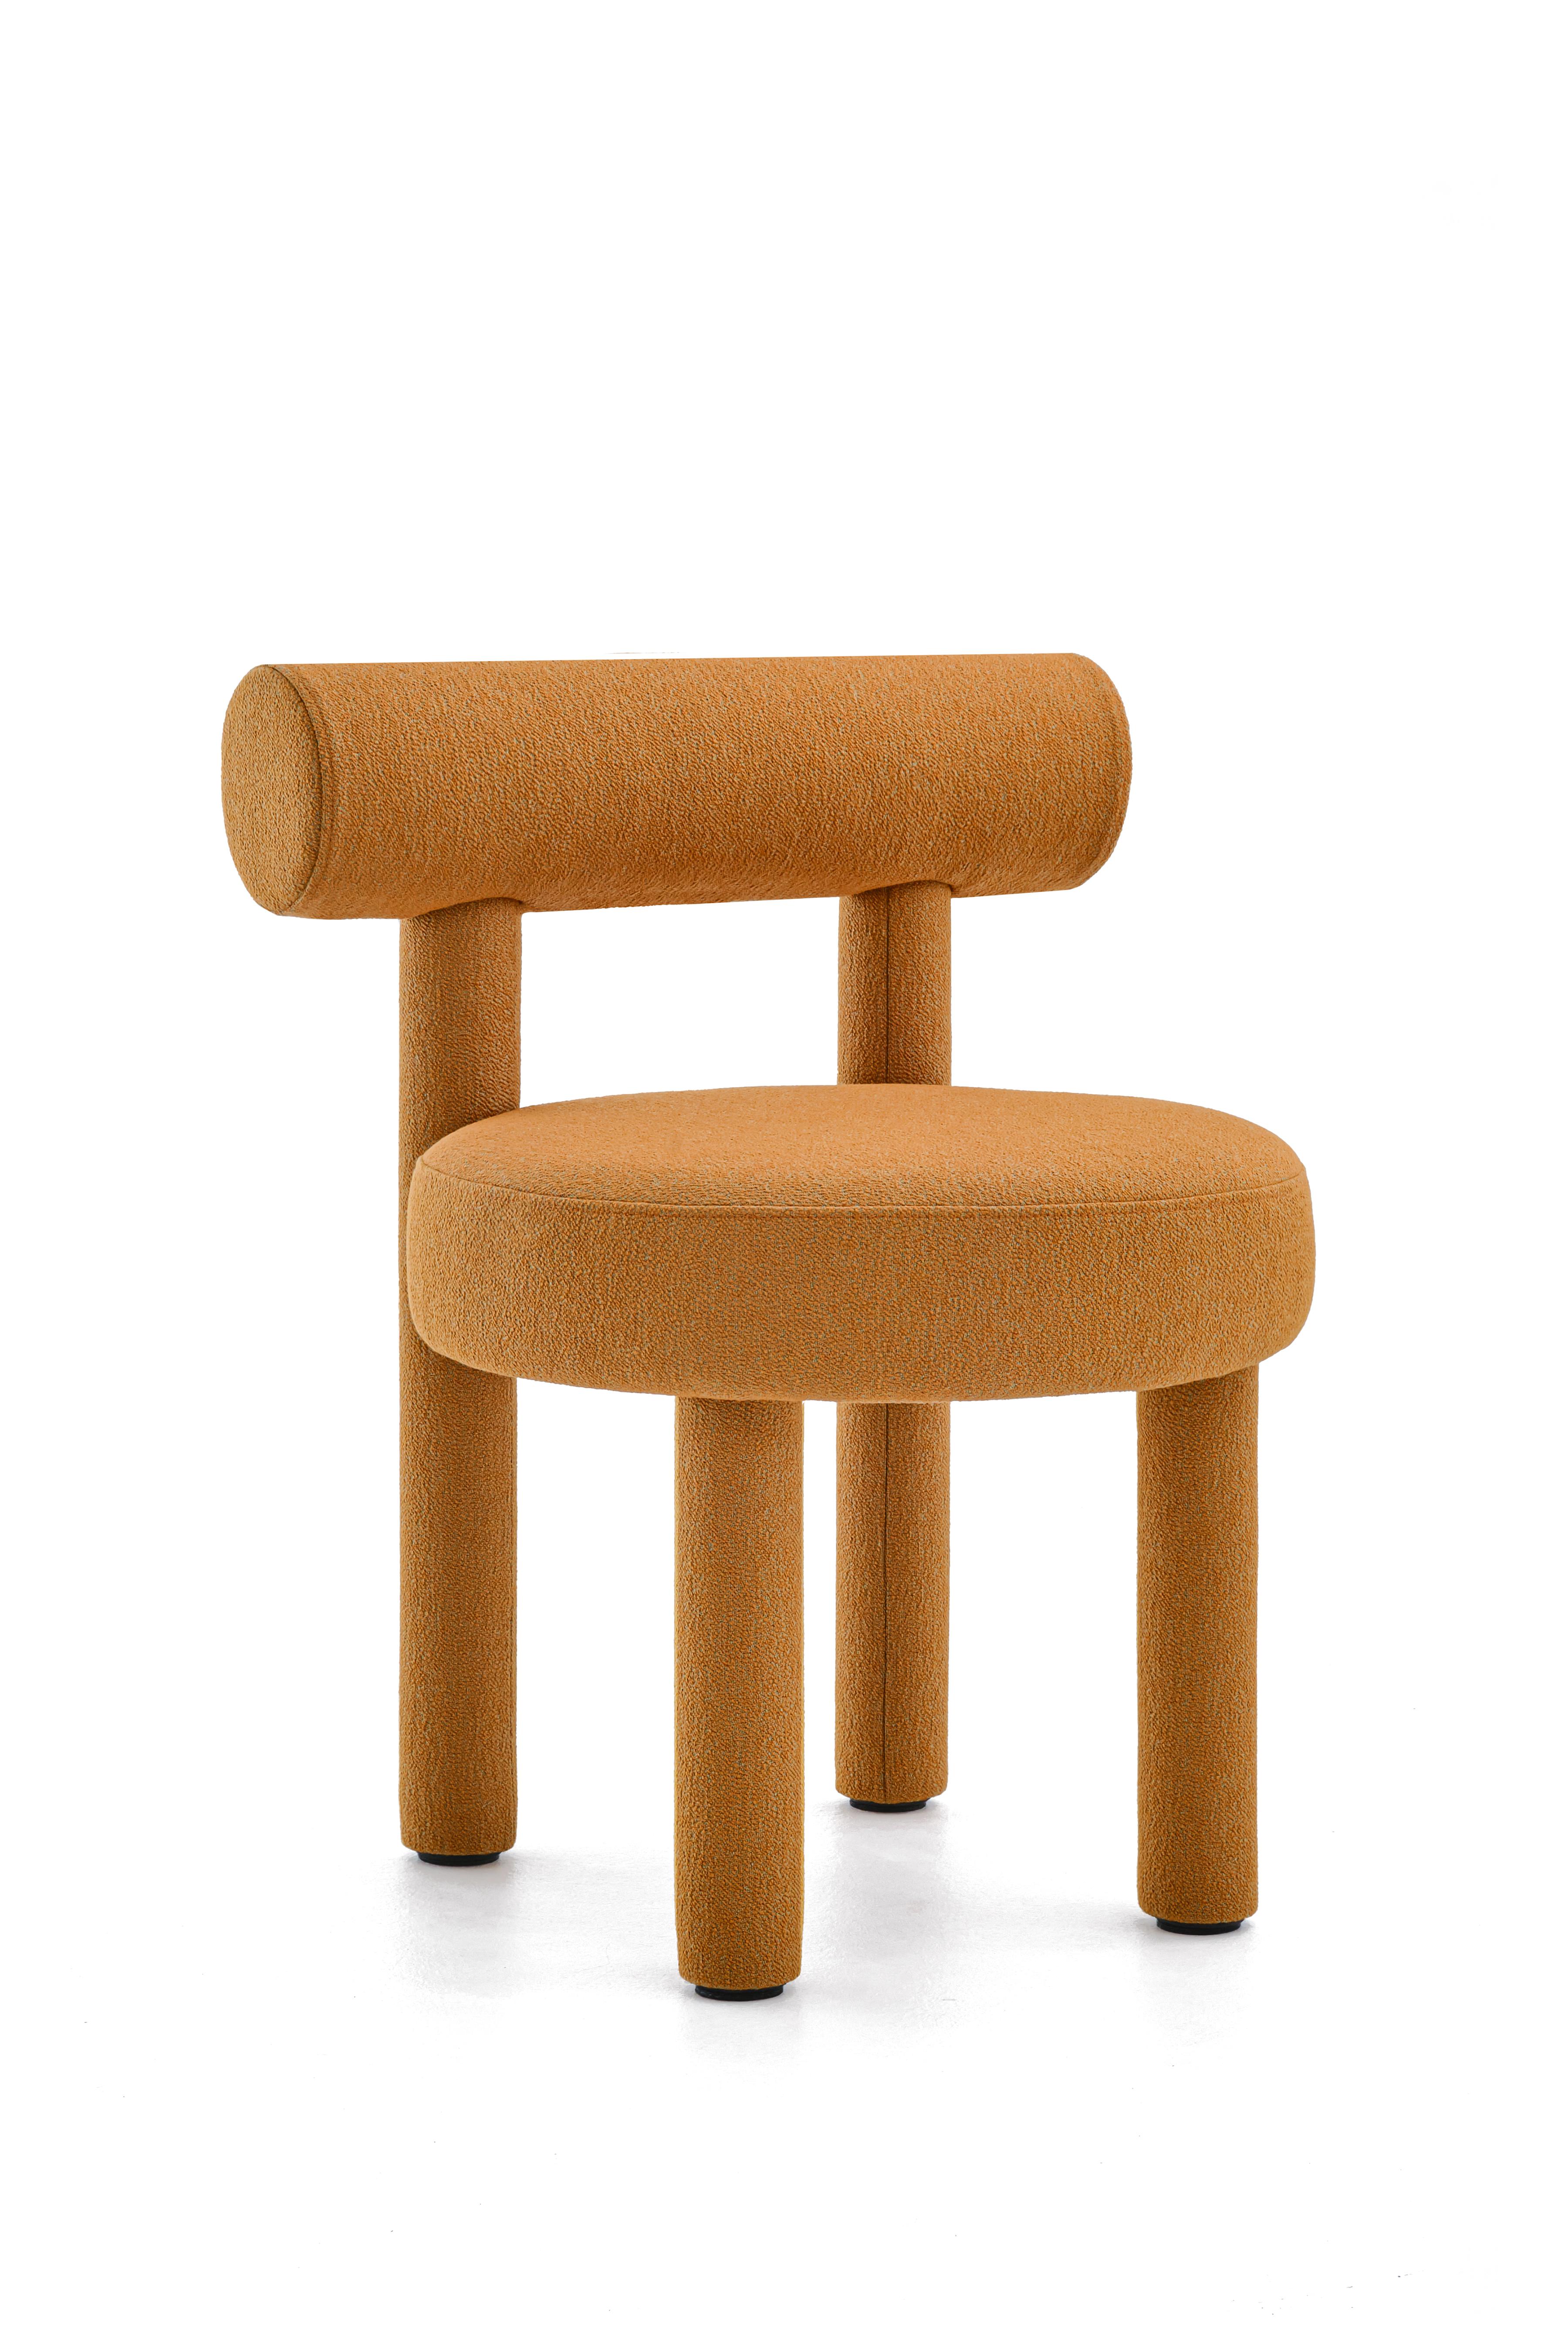 Organic Modern Contemporary Orange Chair 'Gropius CS1' by Noom, Sera Rohi, Chutney For Sale